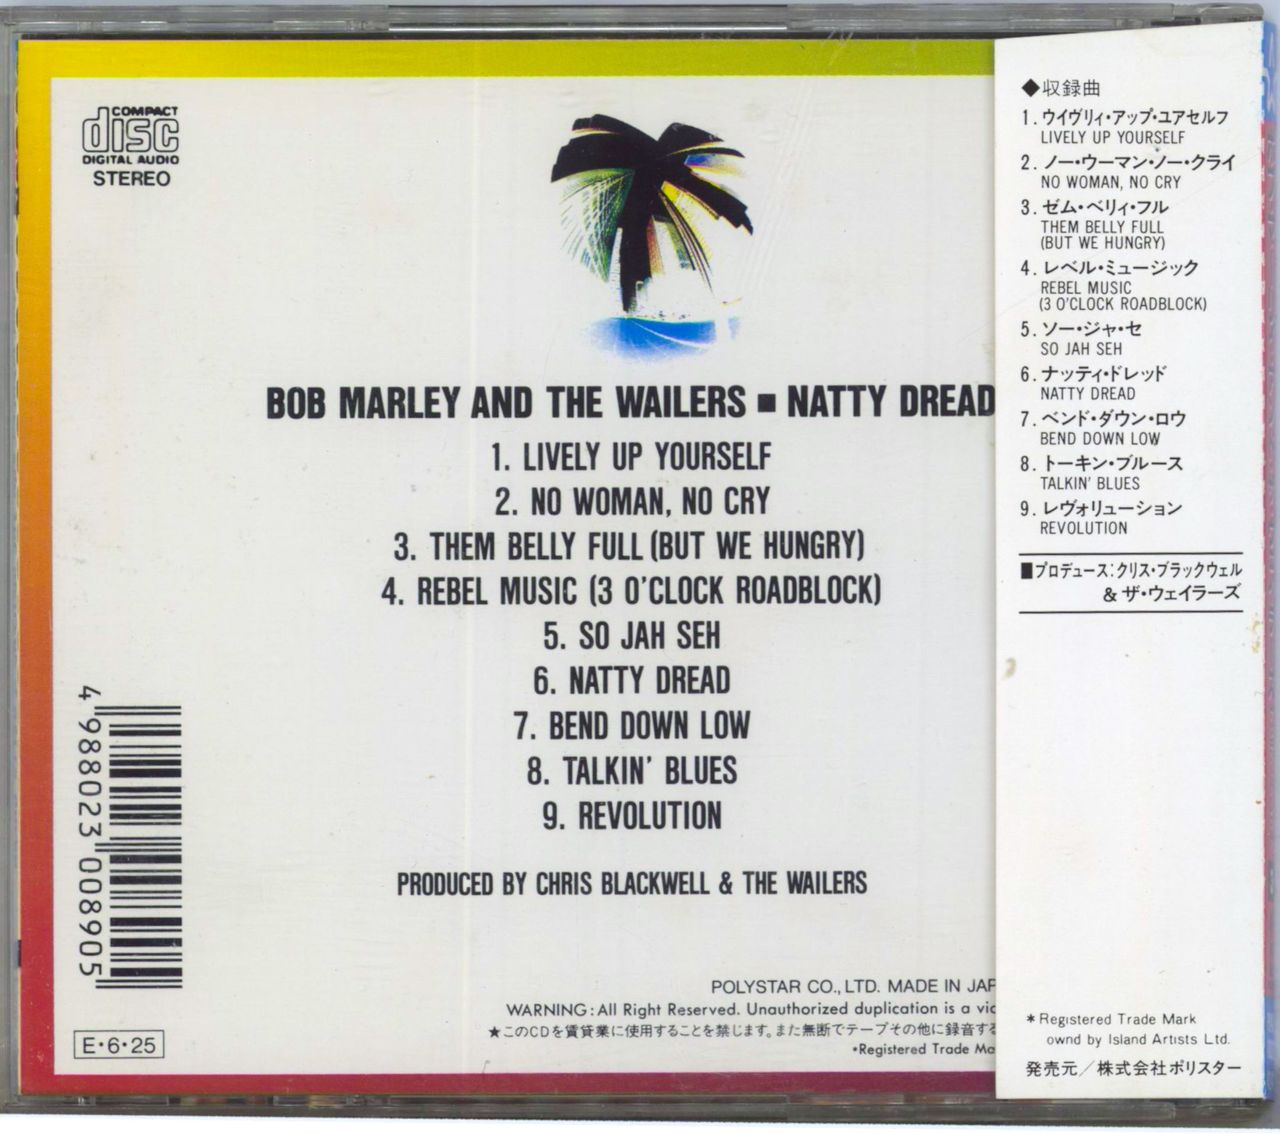 Bob Marley & The Wailers Natty Dread Japanese CD album — RareVinyl.com